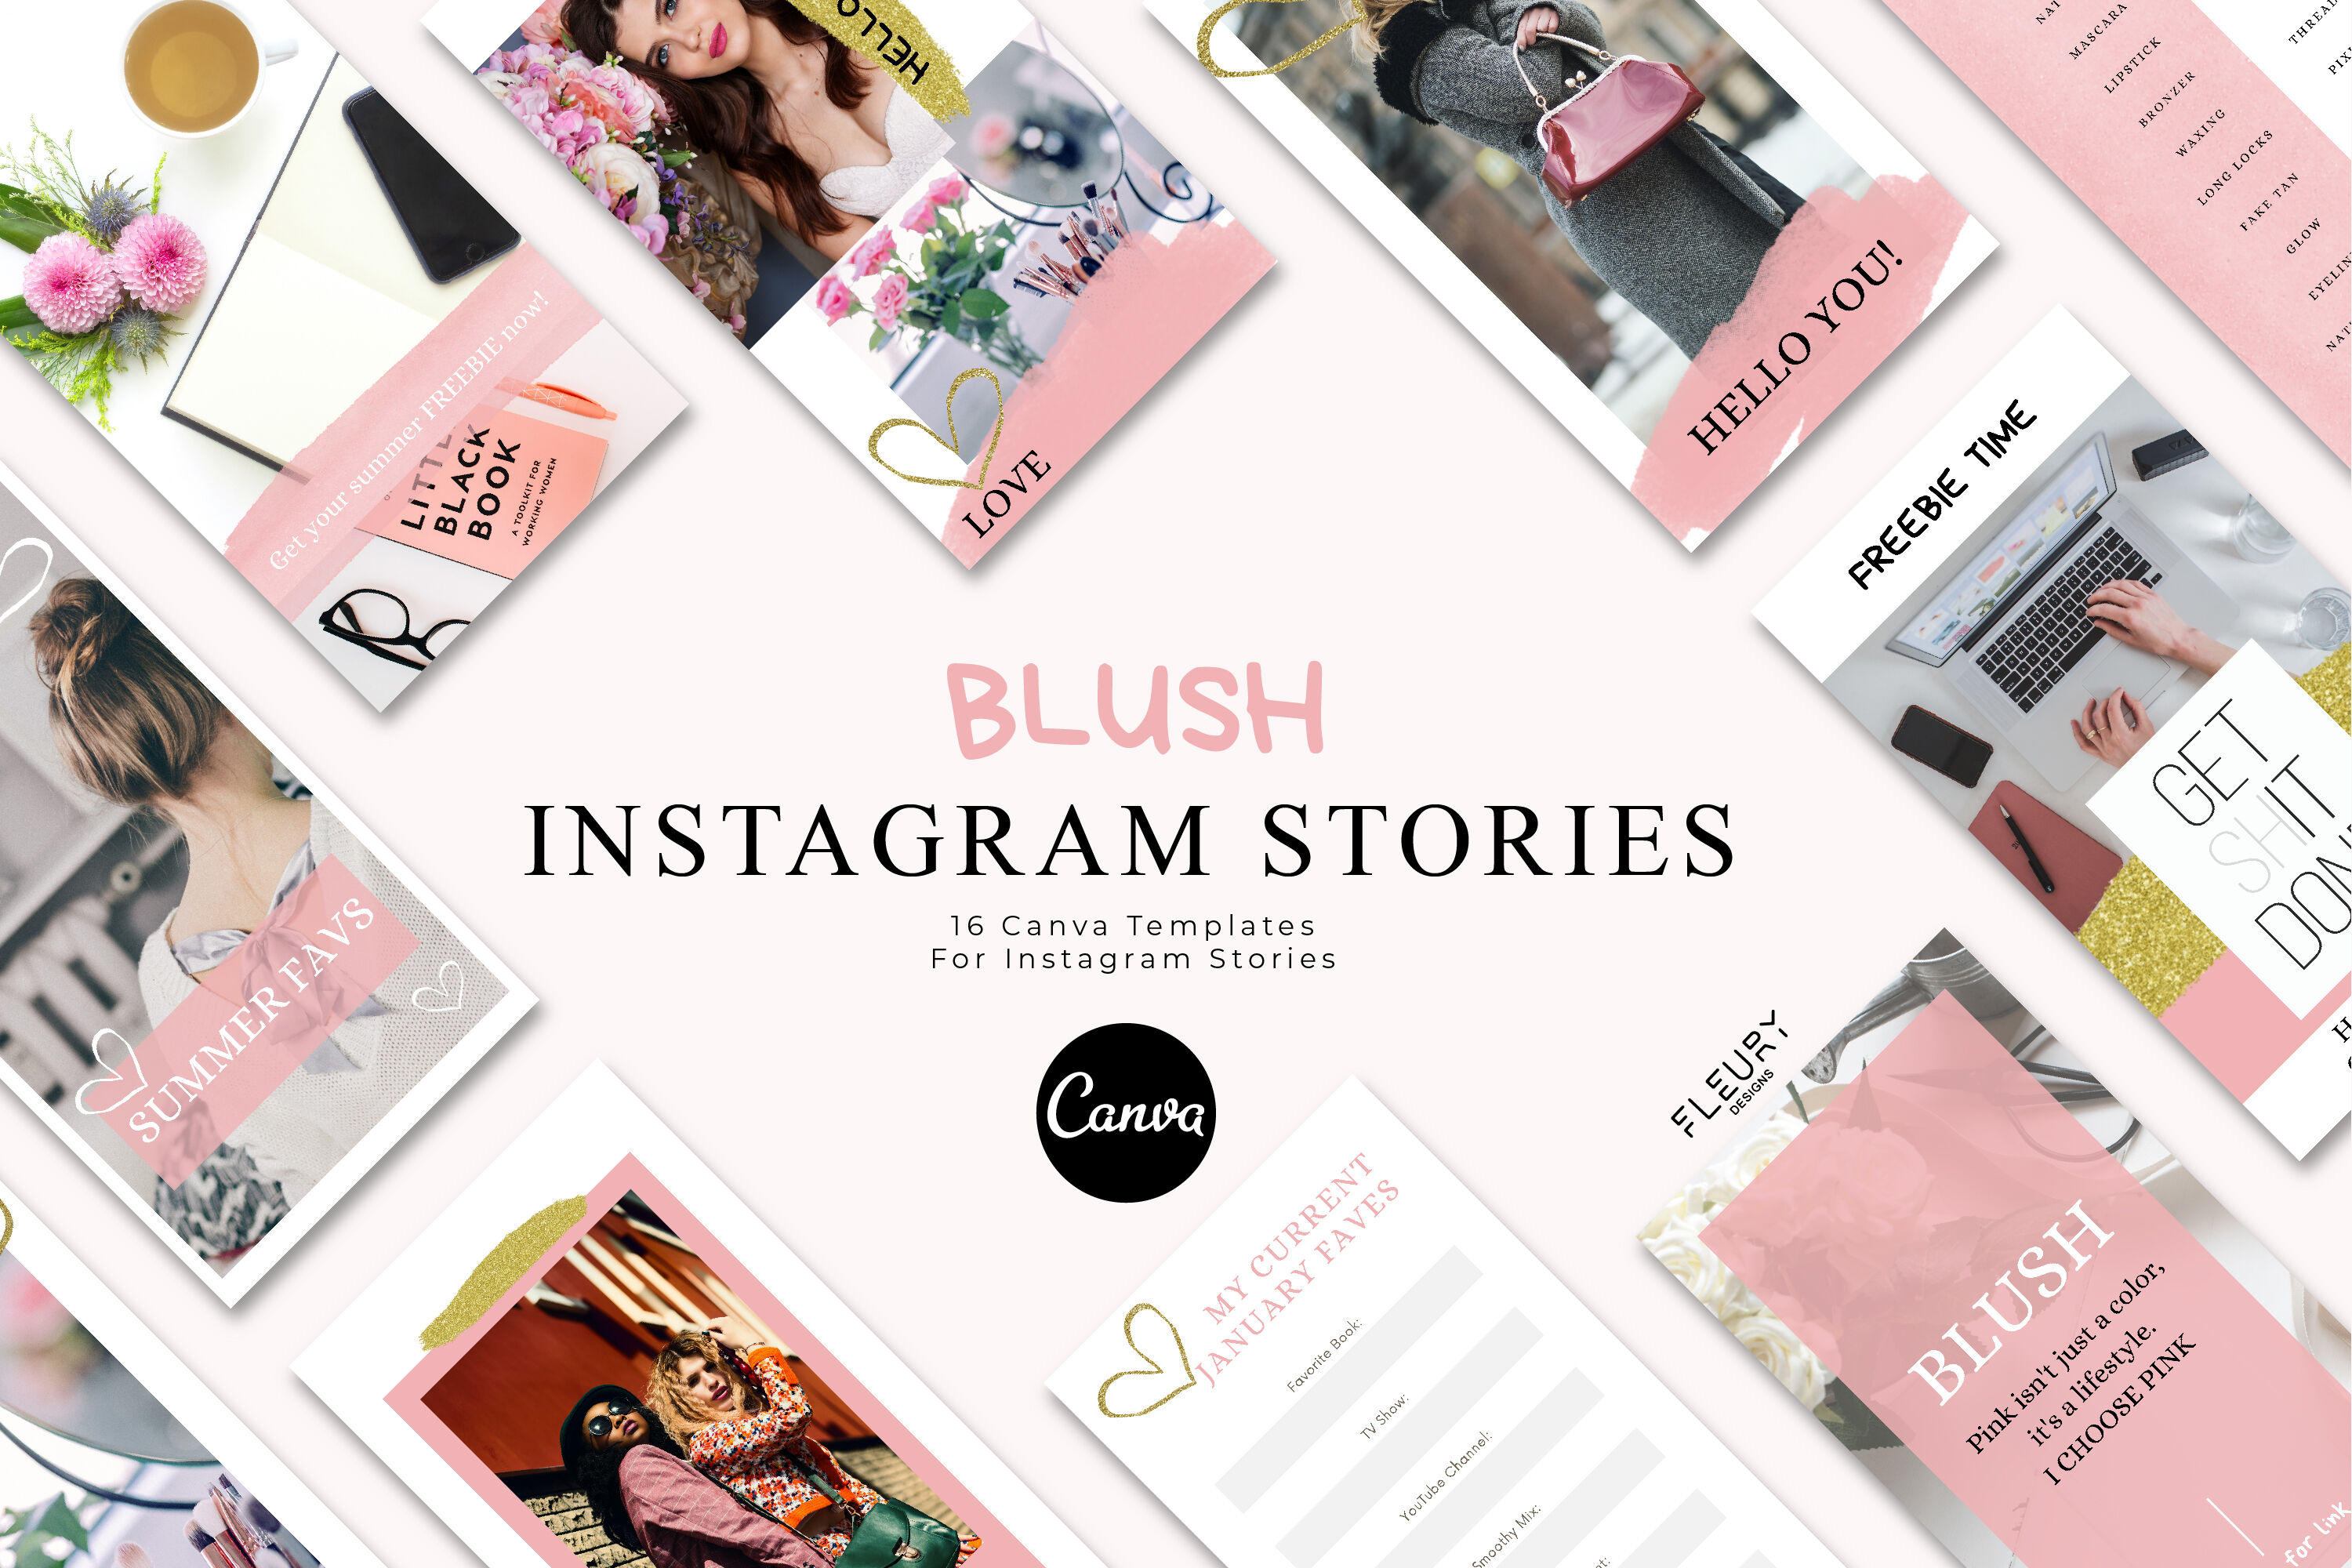 blush-instagram-story-templates-for-canva-by-christine-fleury-thehungryjpeg